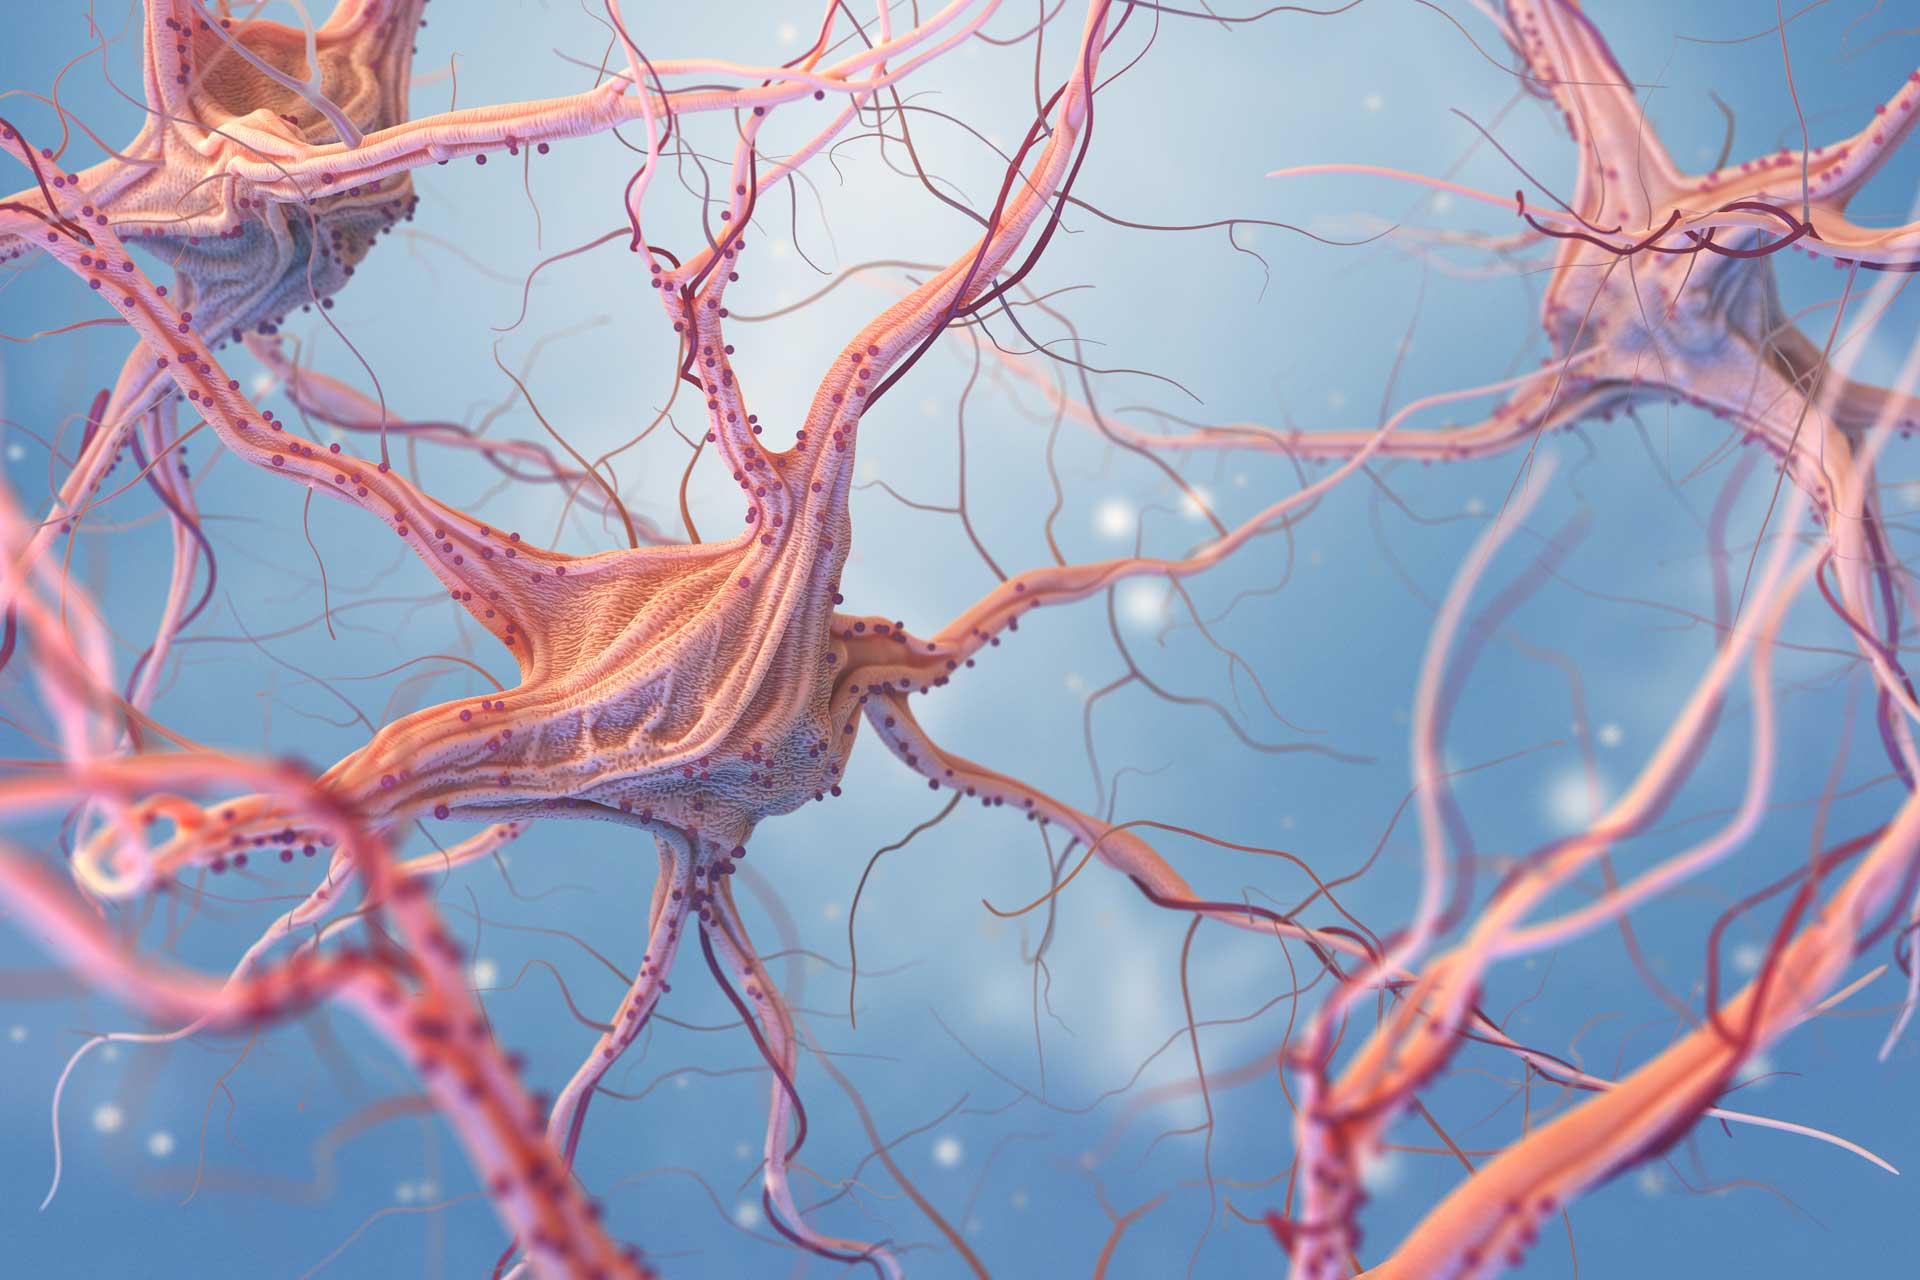 image of multiple nerve cells